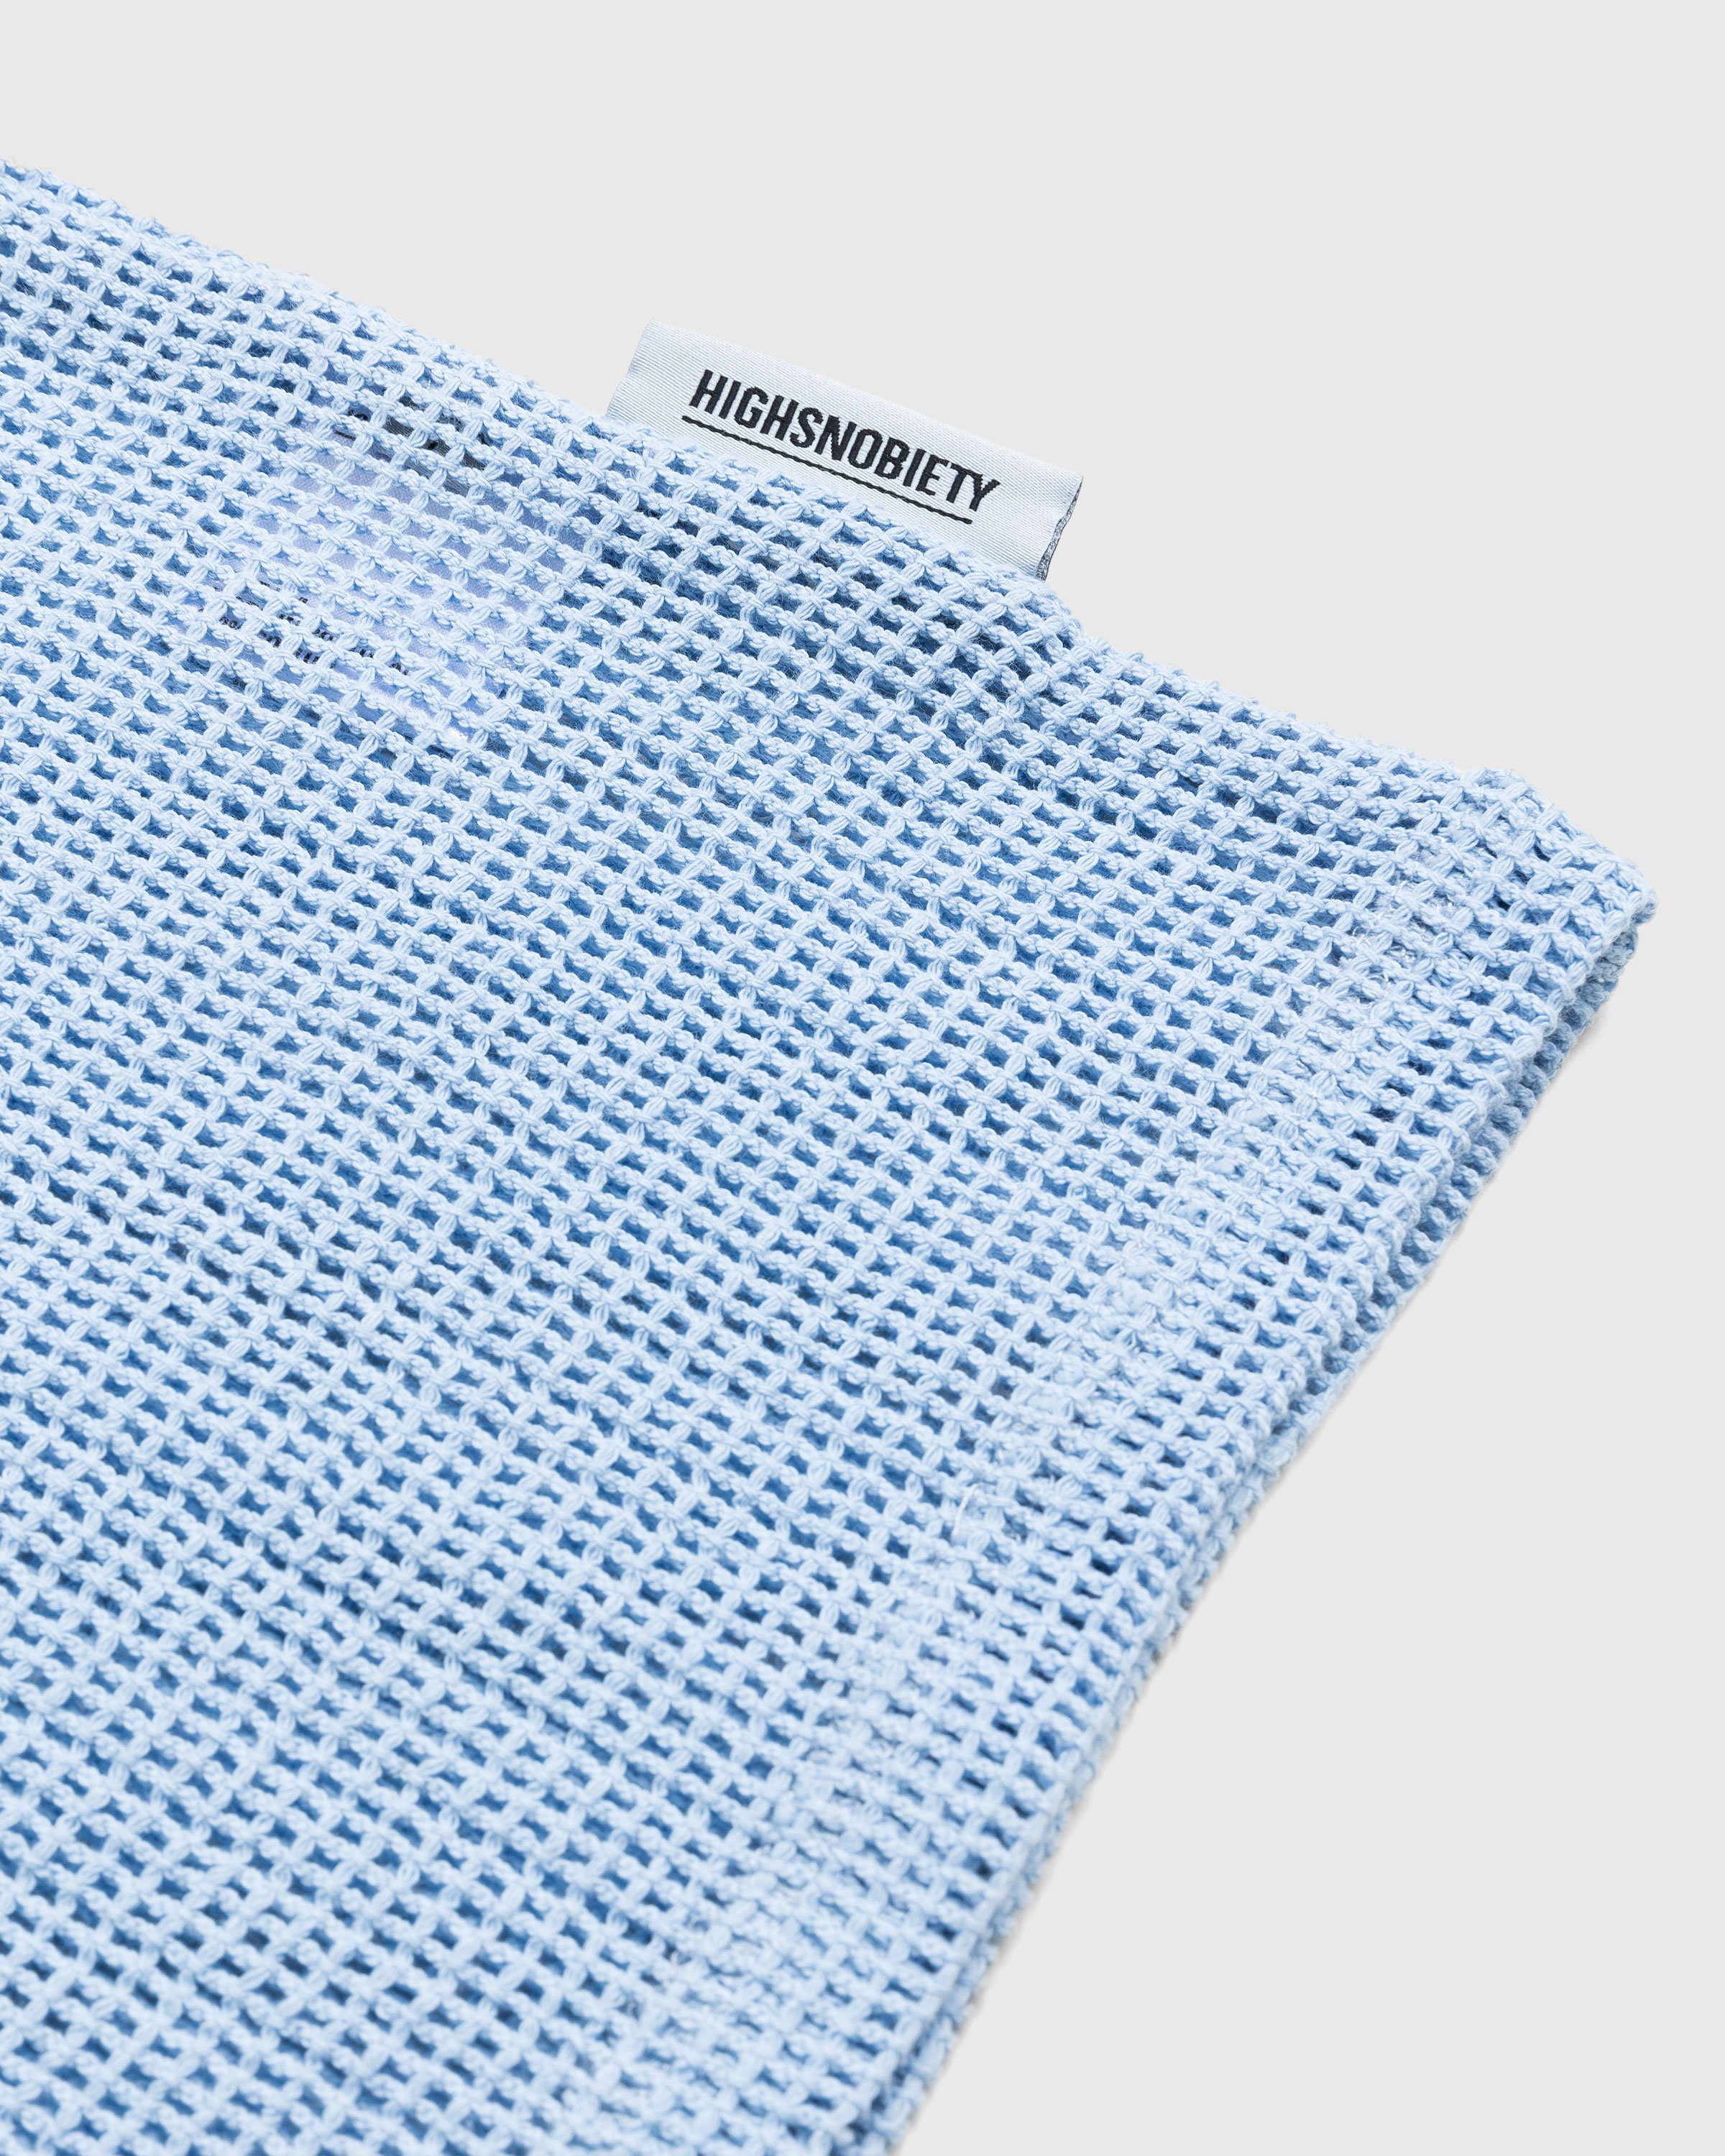 Highsnobiety - Cotton Mesh Knit T-Shirt Blue - Clothing - Blue - Image 7